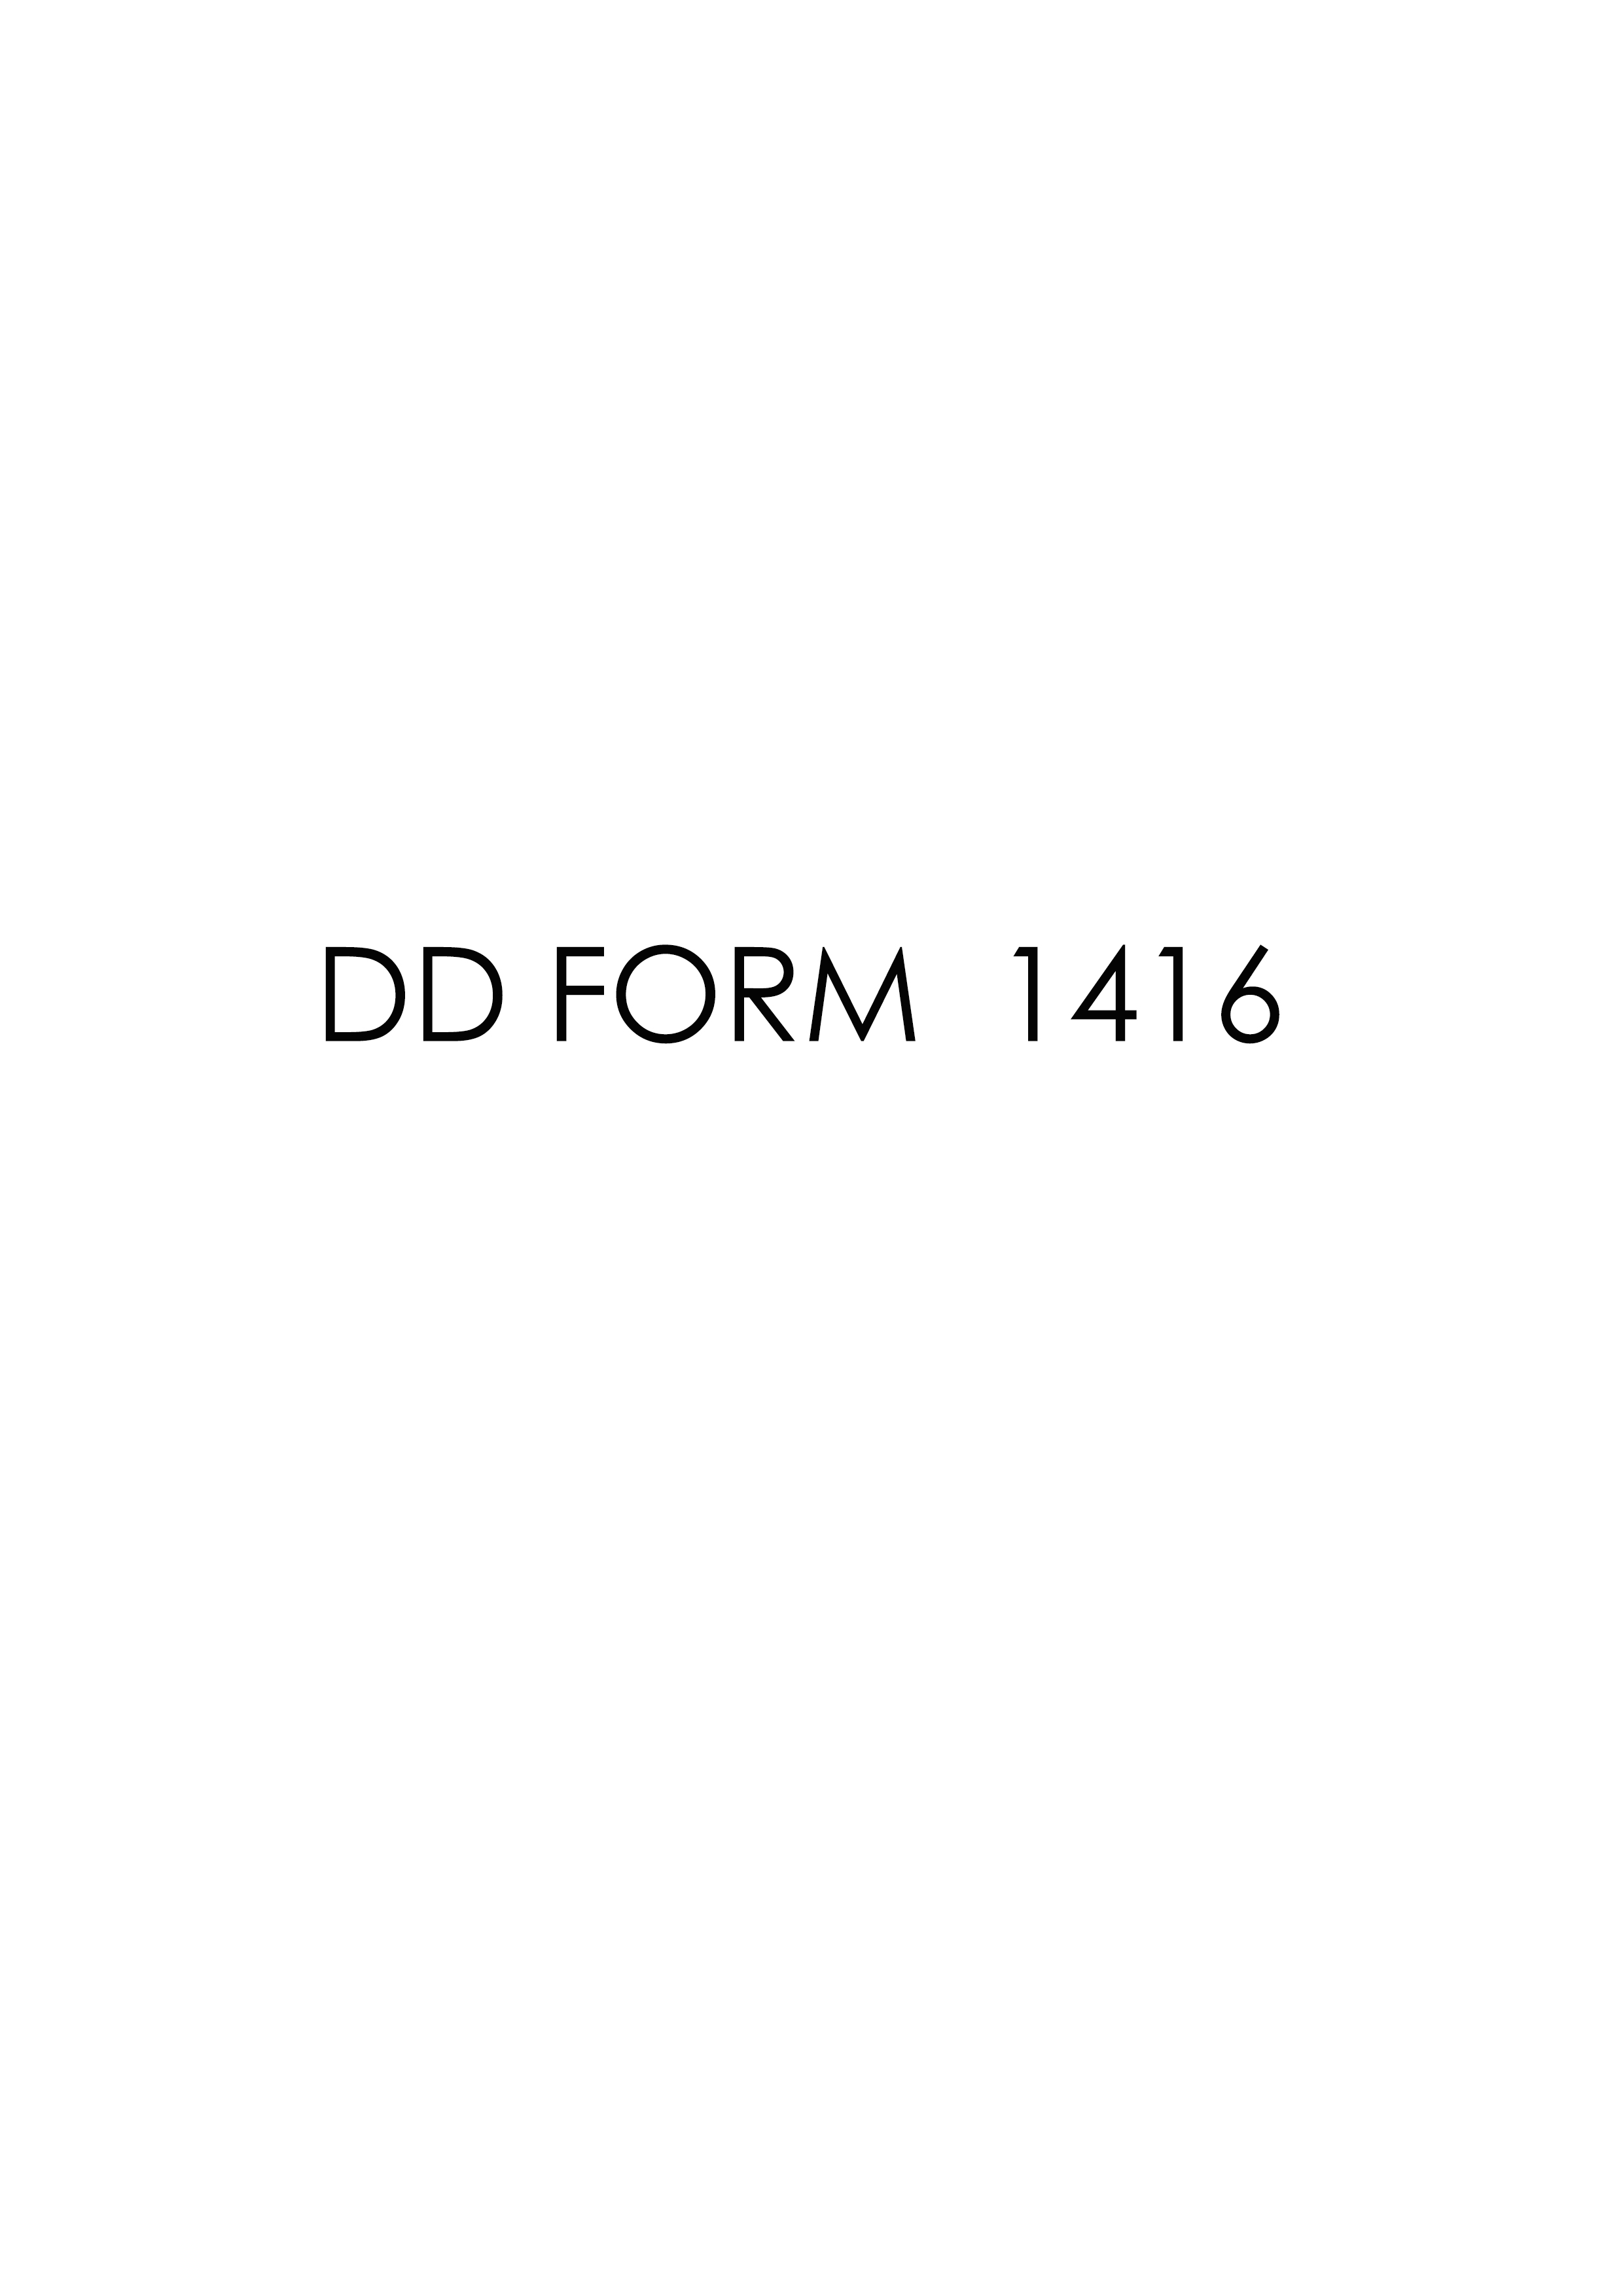 Download dd form 1416